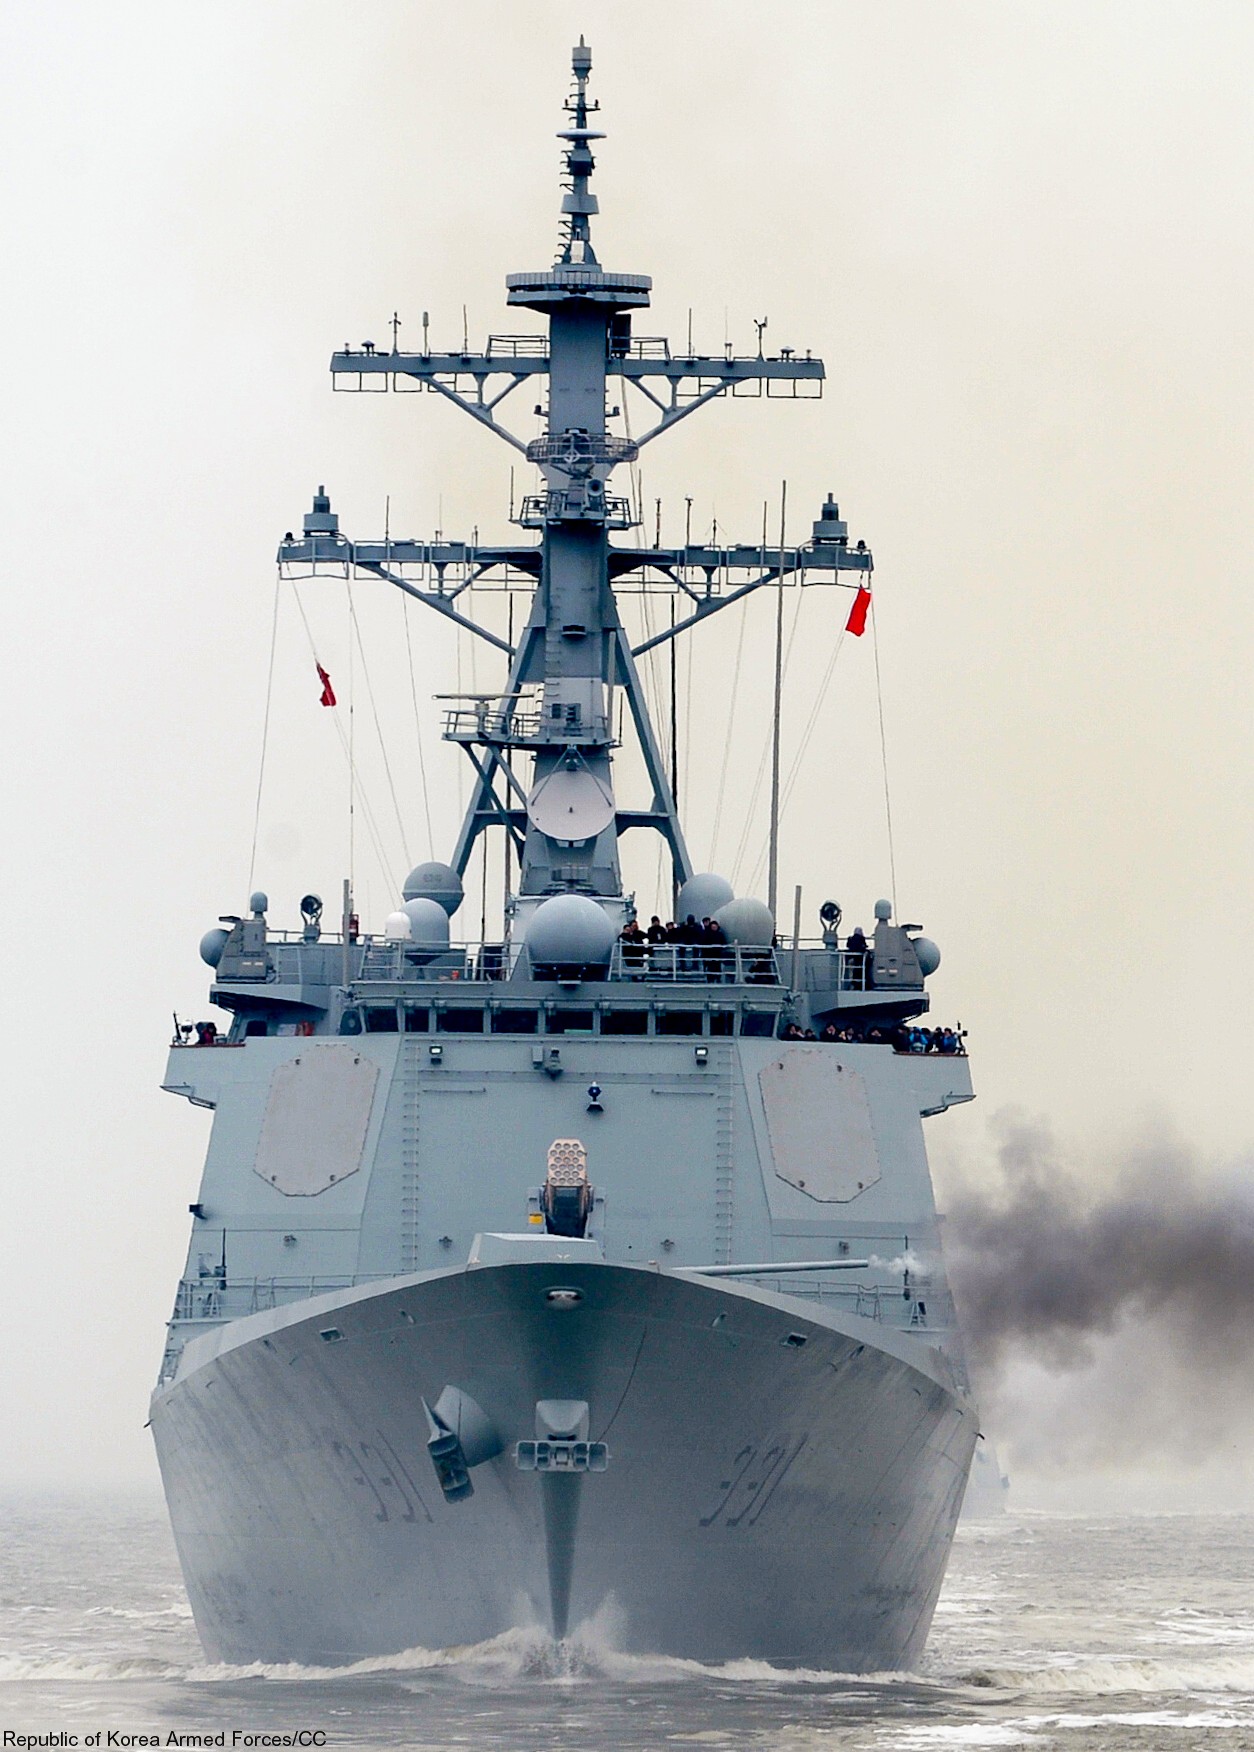 ddg-991 roks sejong the great guided missile destroyer aegis republic of korea navy rok 34